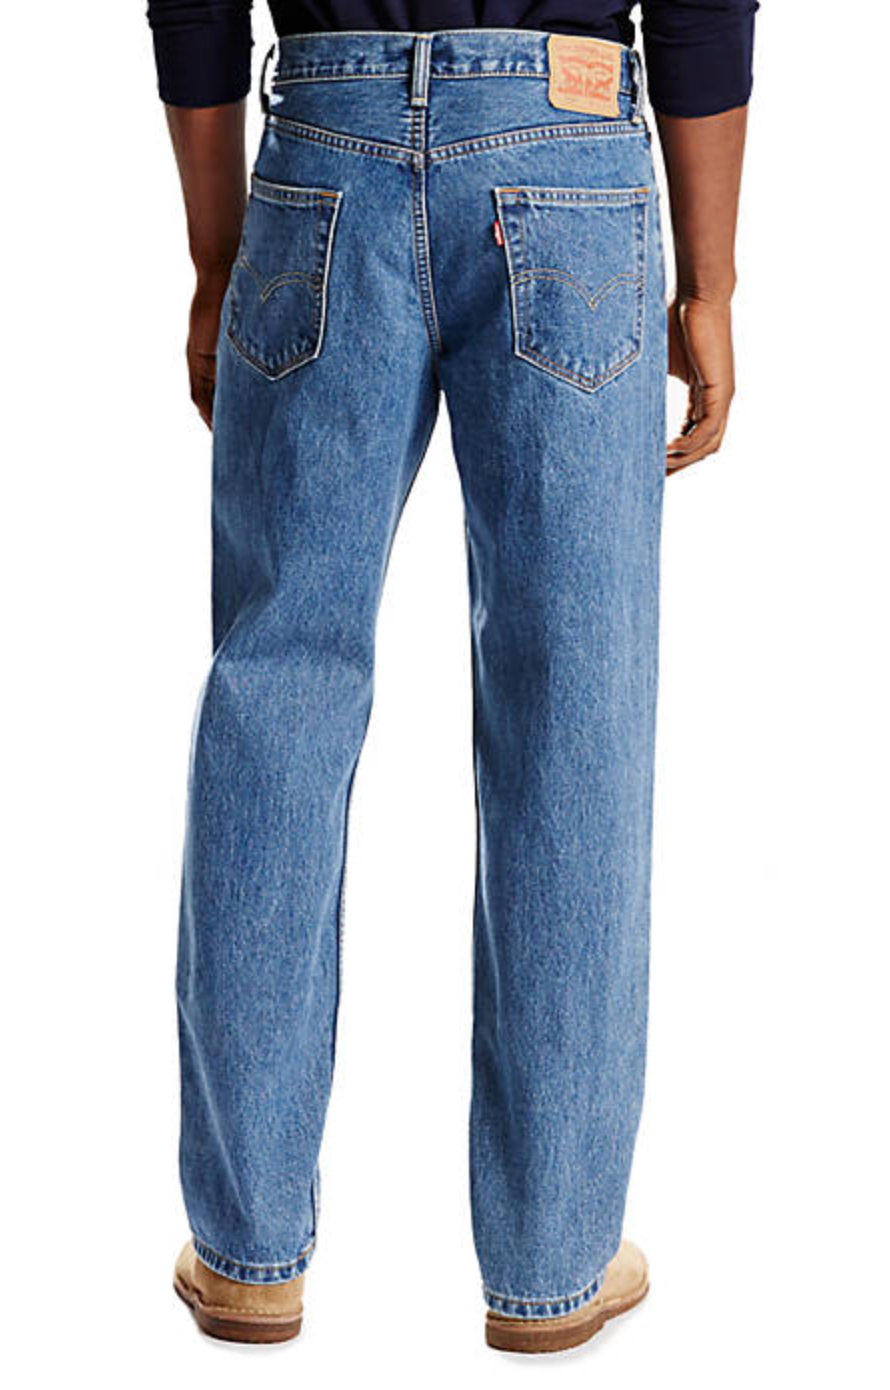 Levi's - 005504891 550™ Relaxed Fit Men's Jeans - Medium Blue